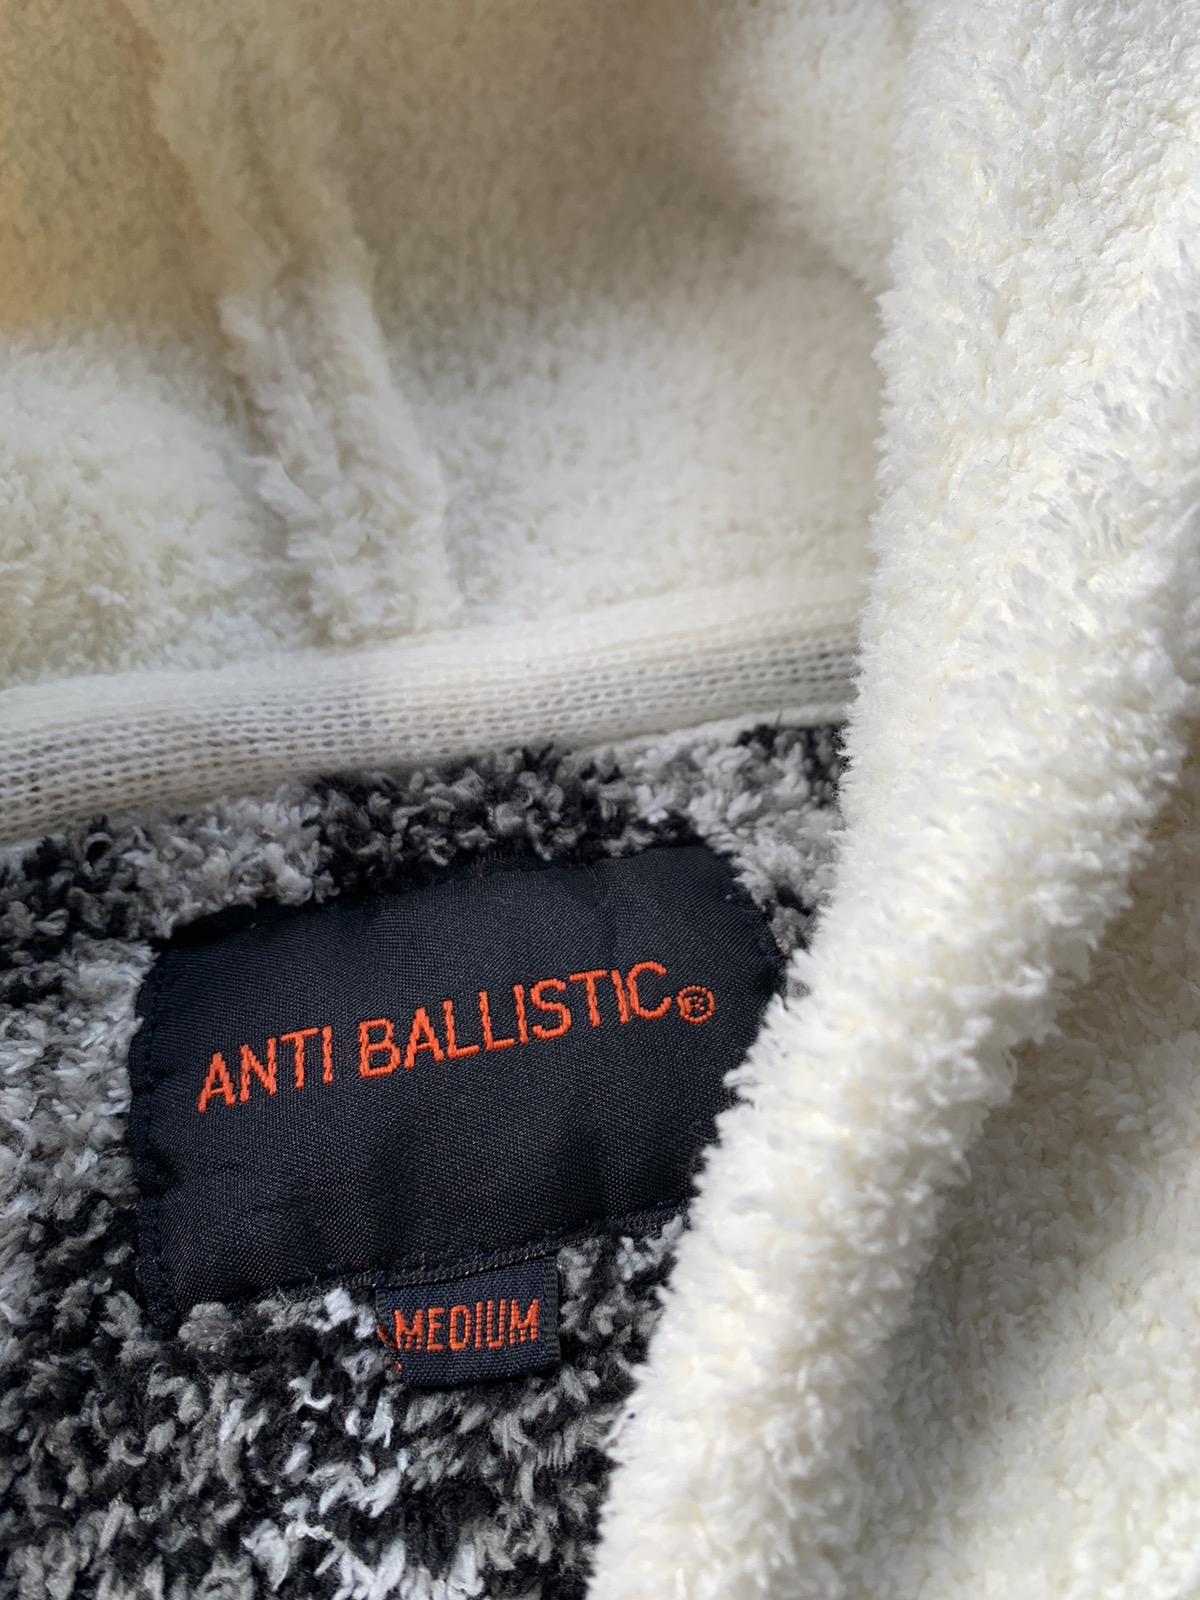 Very Rare - Anti ballistic fleece full zipper nice design - 10